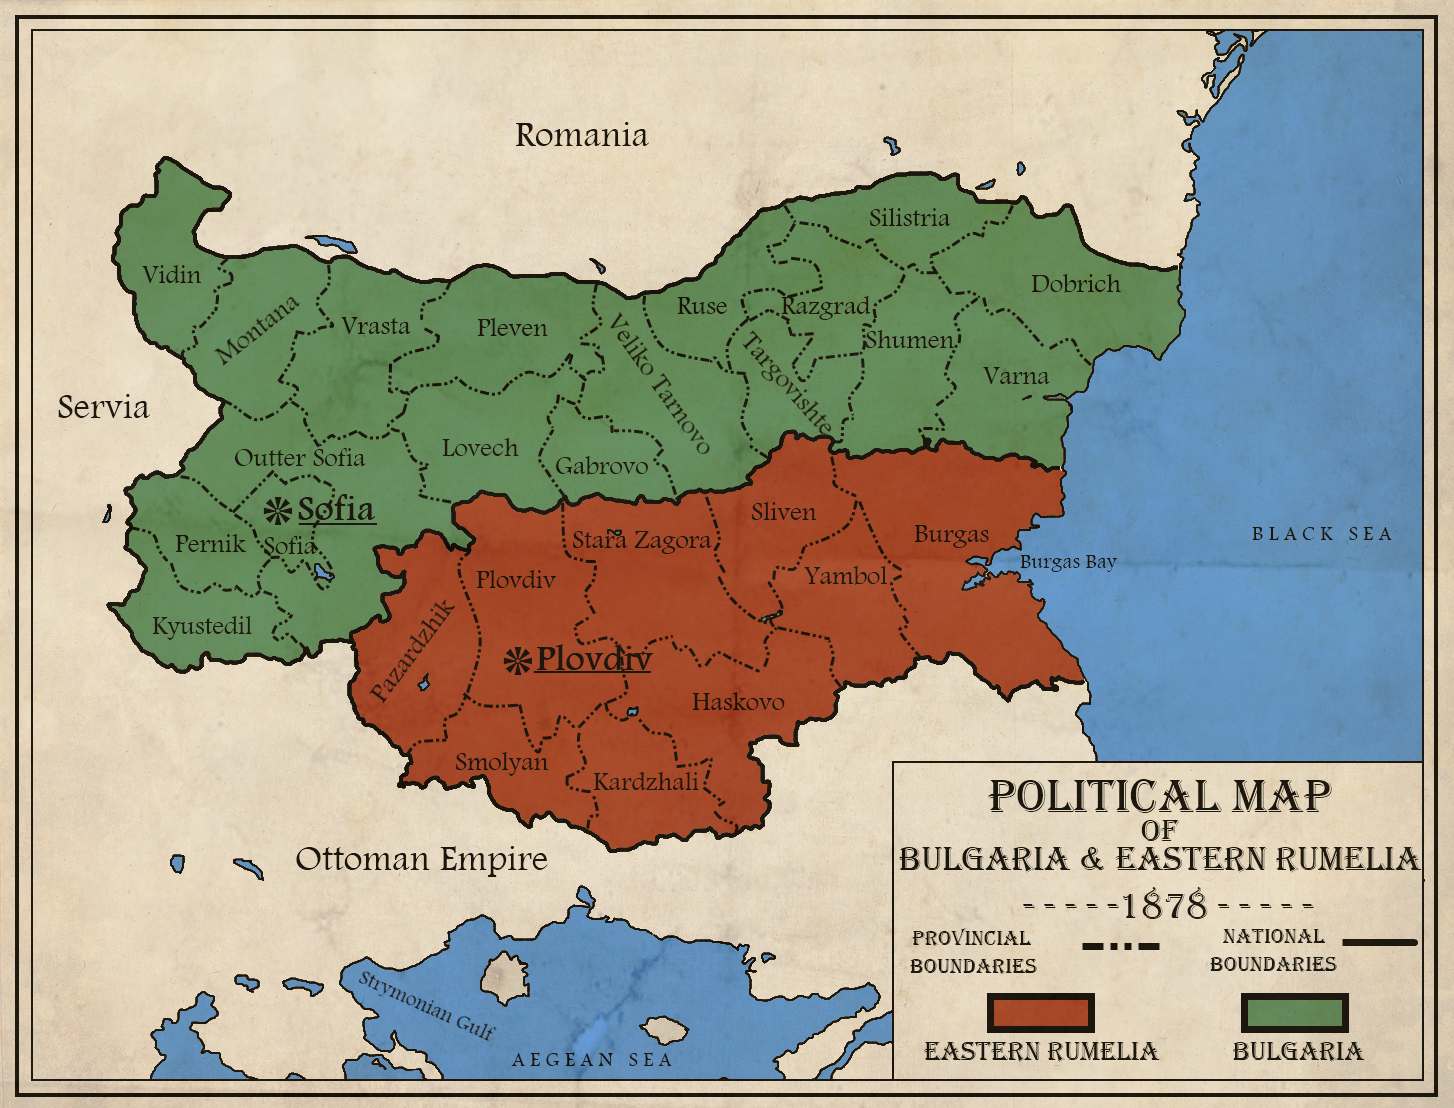 Bulgaria and Eastern Rumelia: 1878